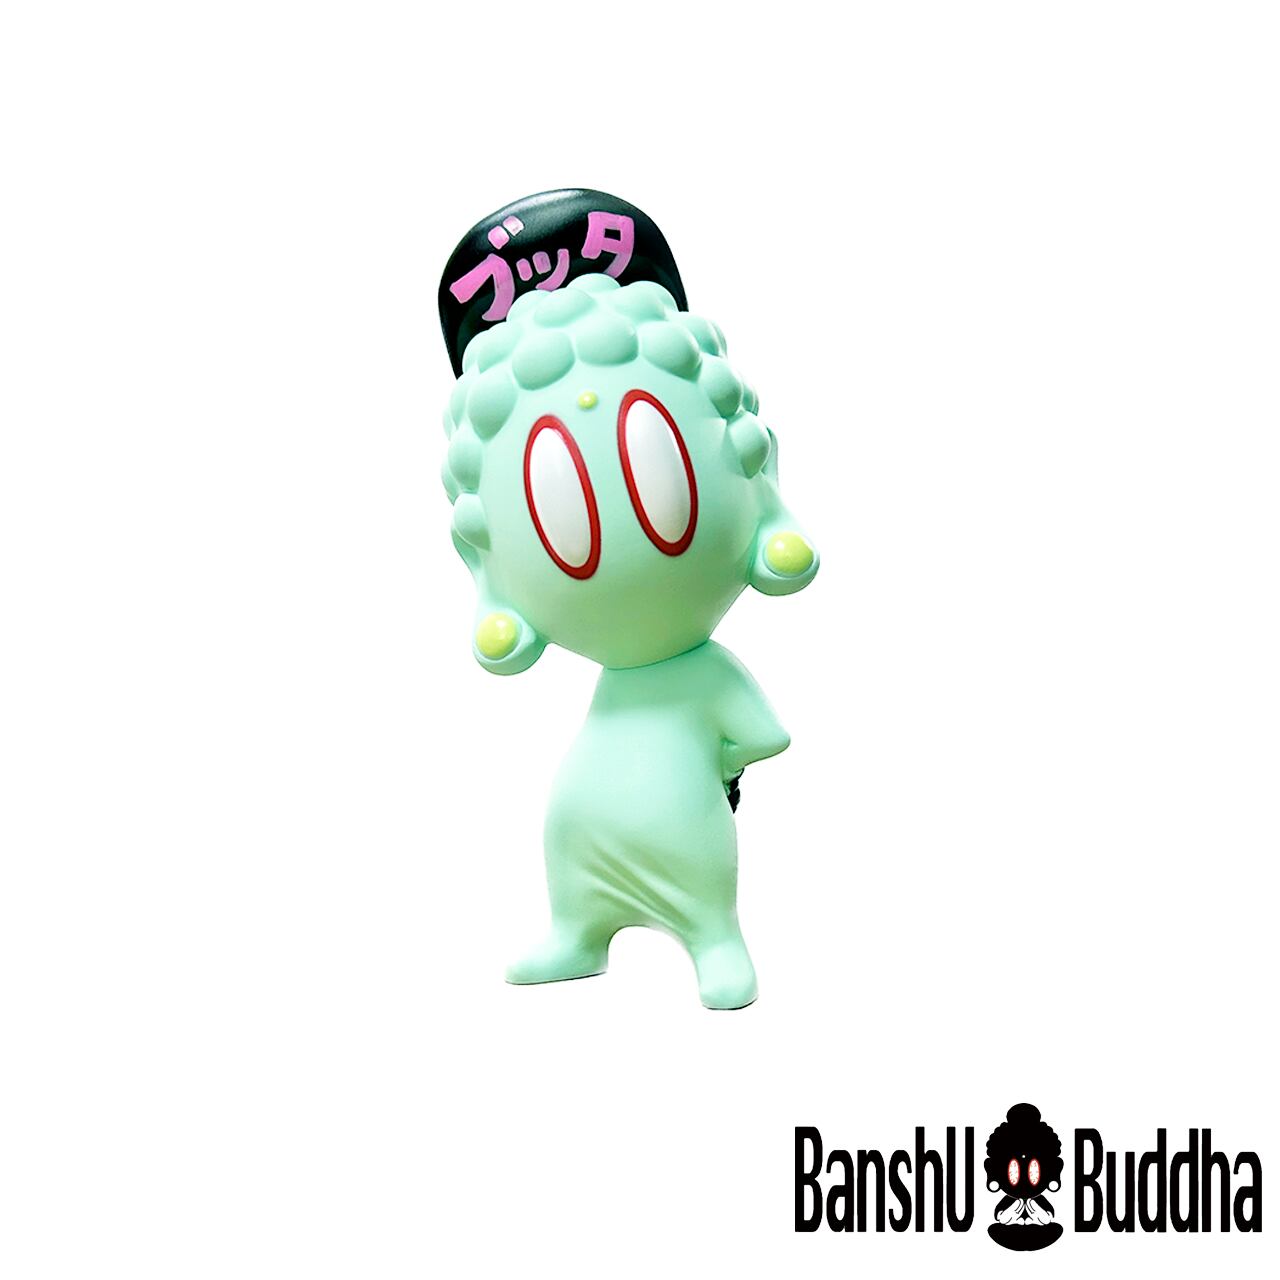 Banshu Buddha ブッタくん